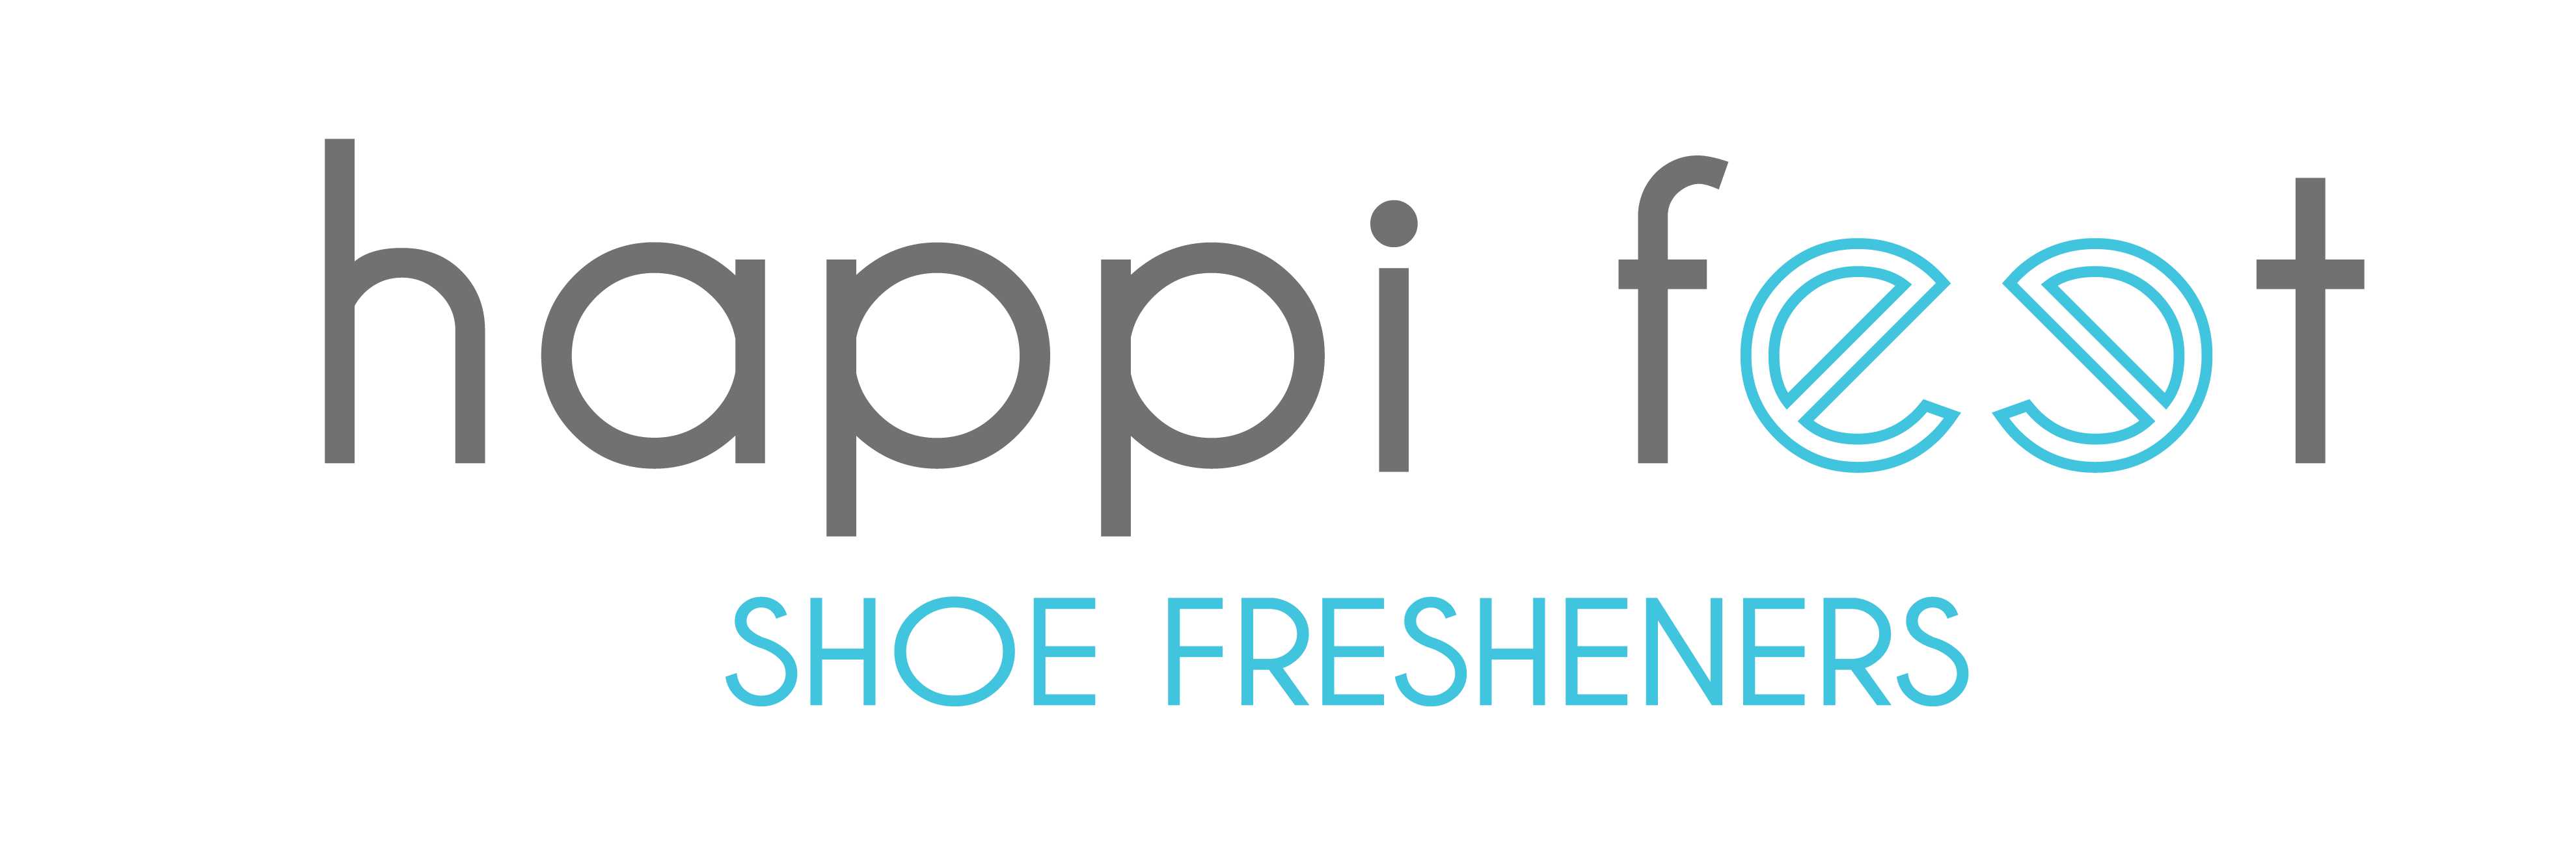 Happi Feet Shoe Fresheners logo